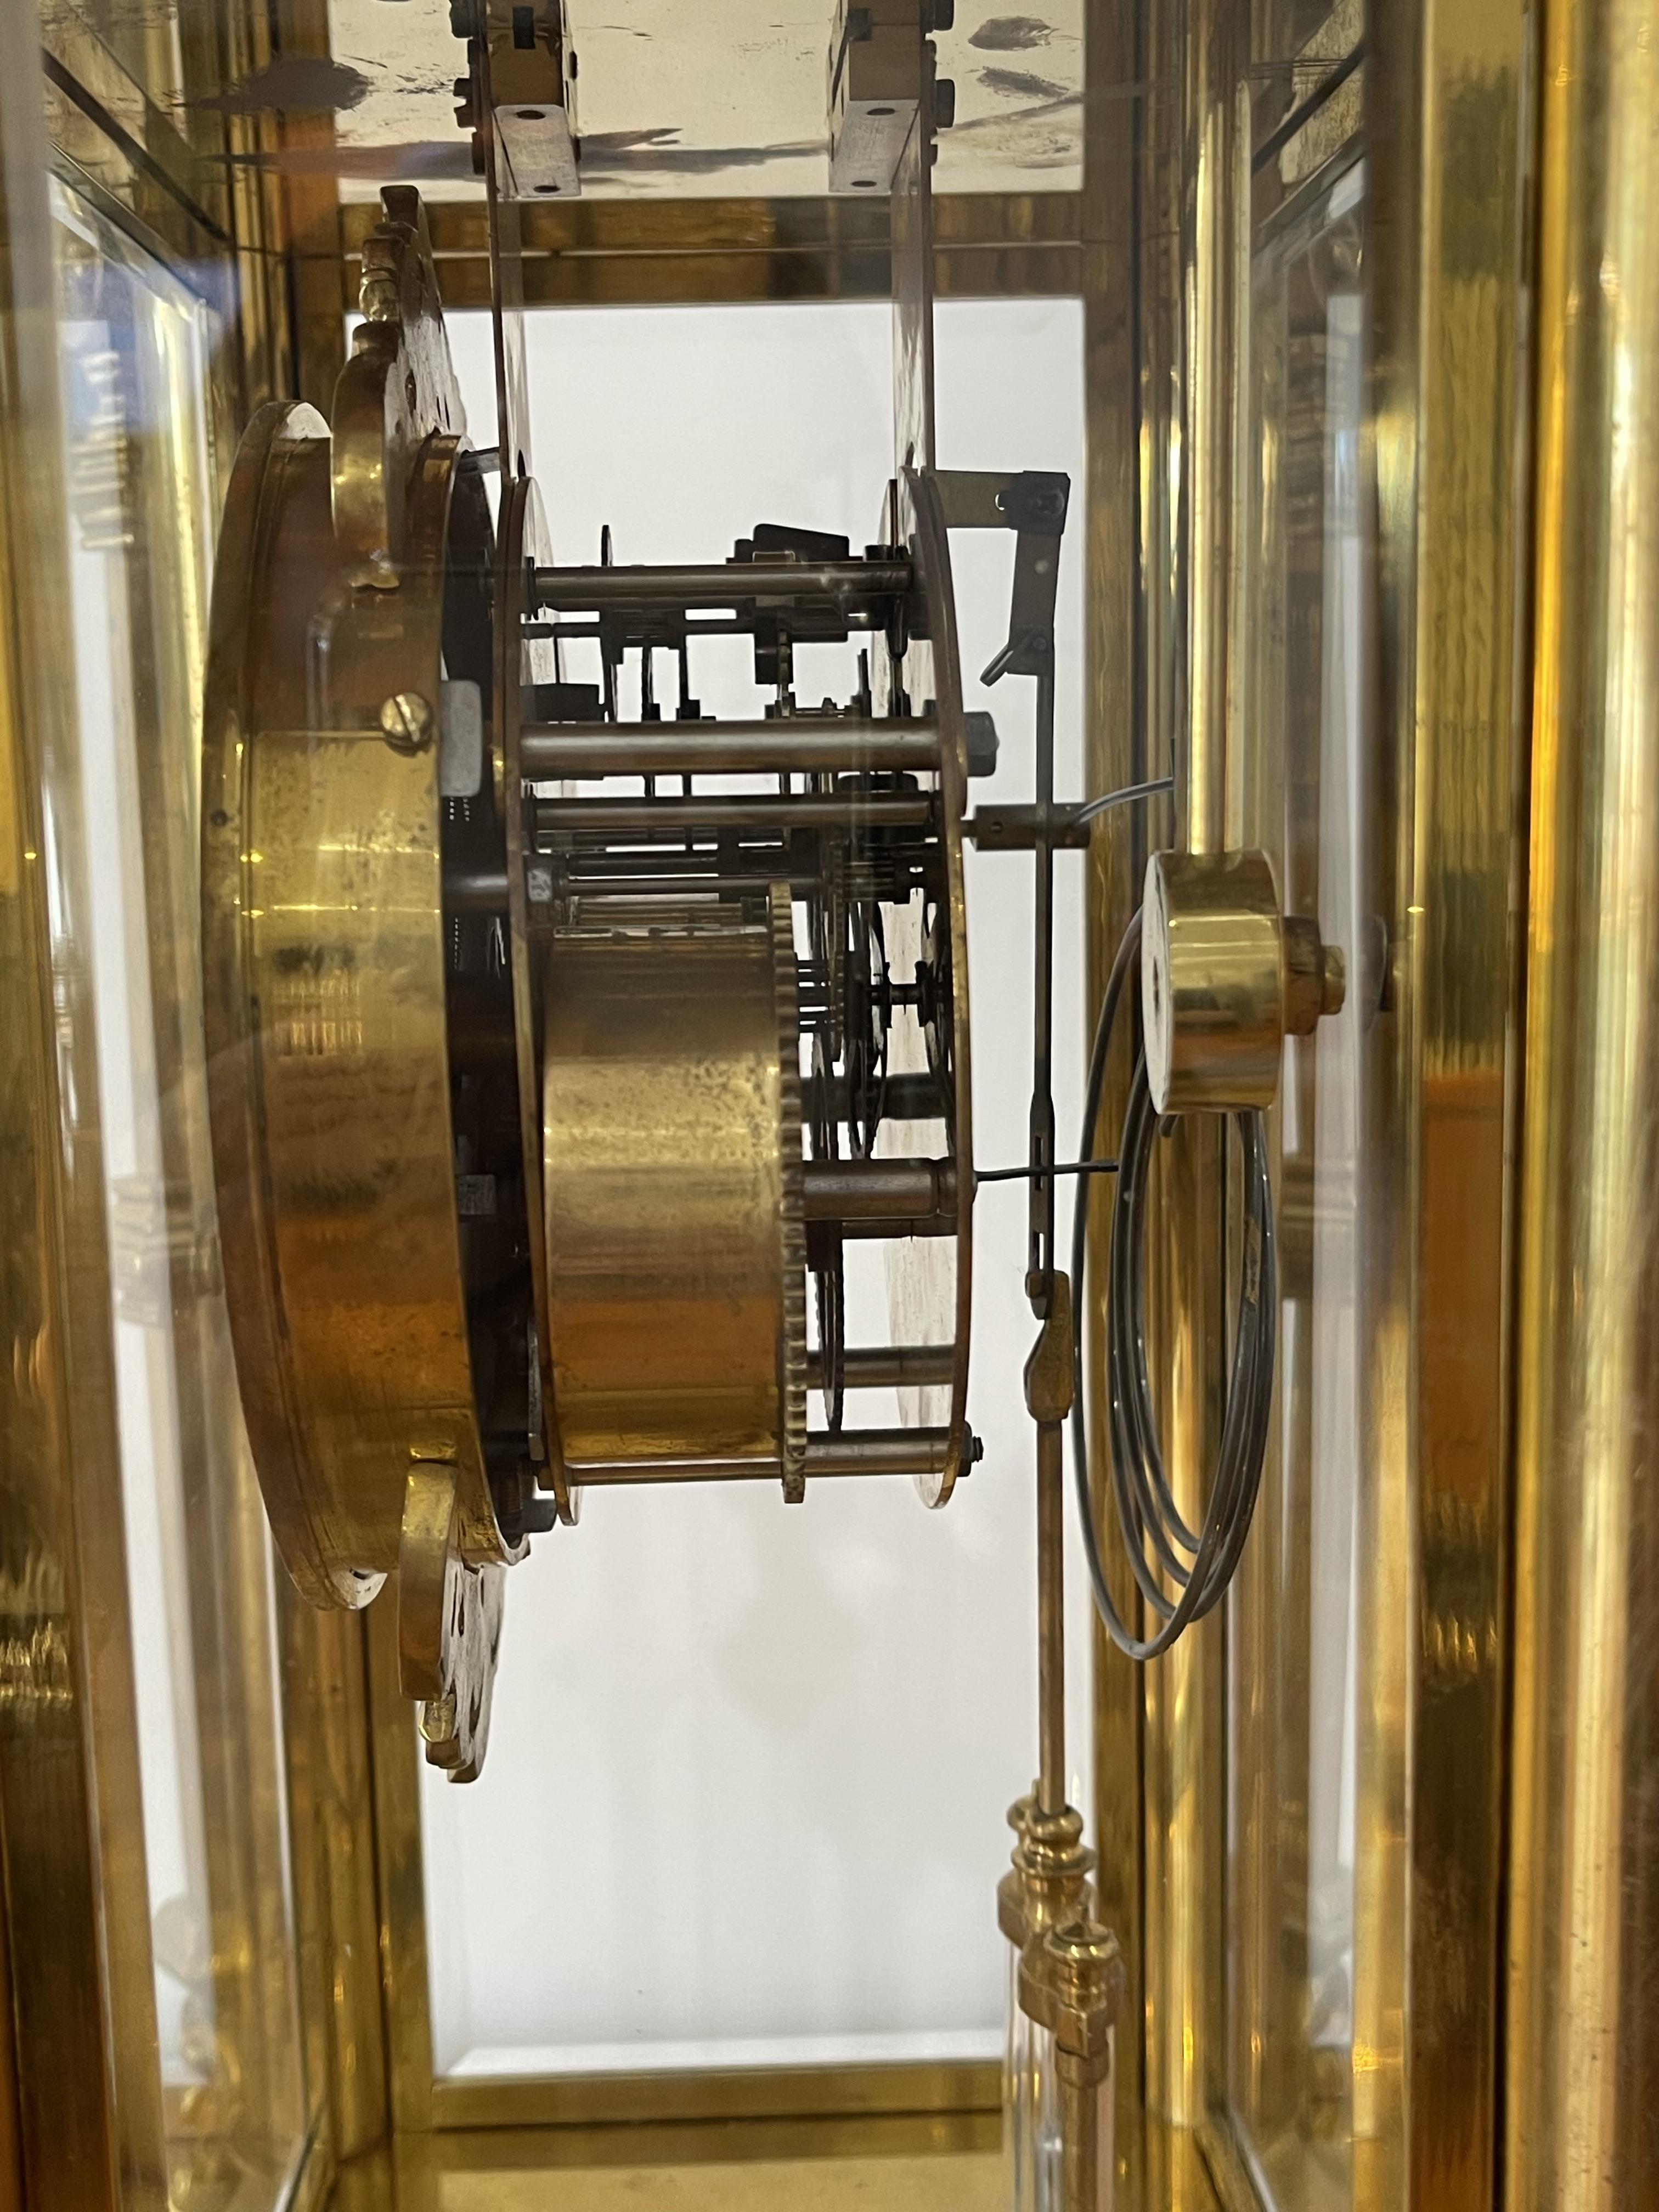 Stunning 8 Day Striking Brass Four Glass Ansonia Mantel Clock - Image 6 of 21